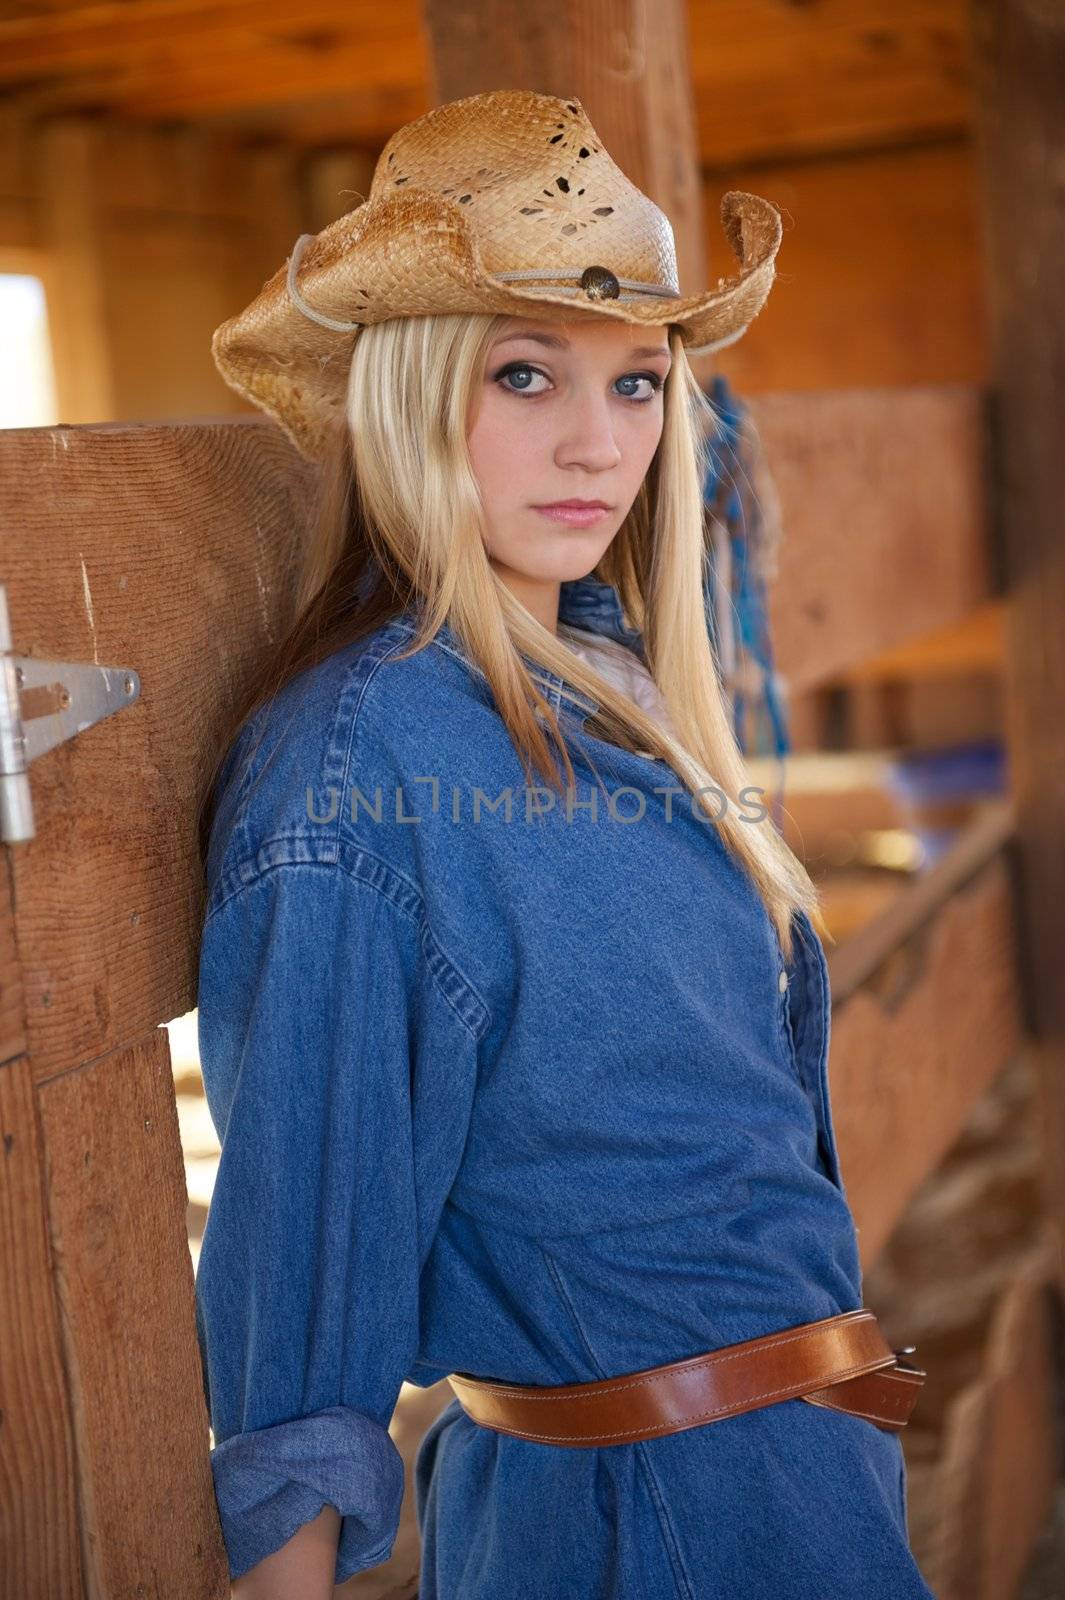 Beautiful Blonde Girl Wearing Cowboy Hat in Barn by pixelsnap